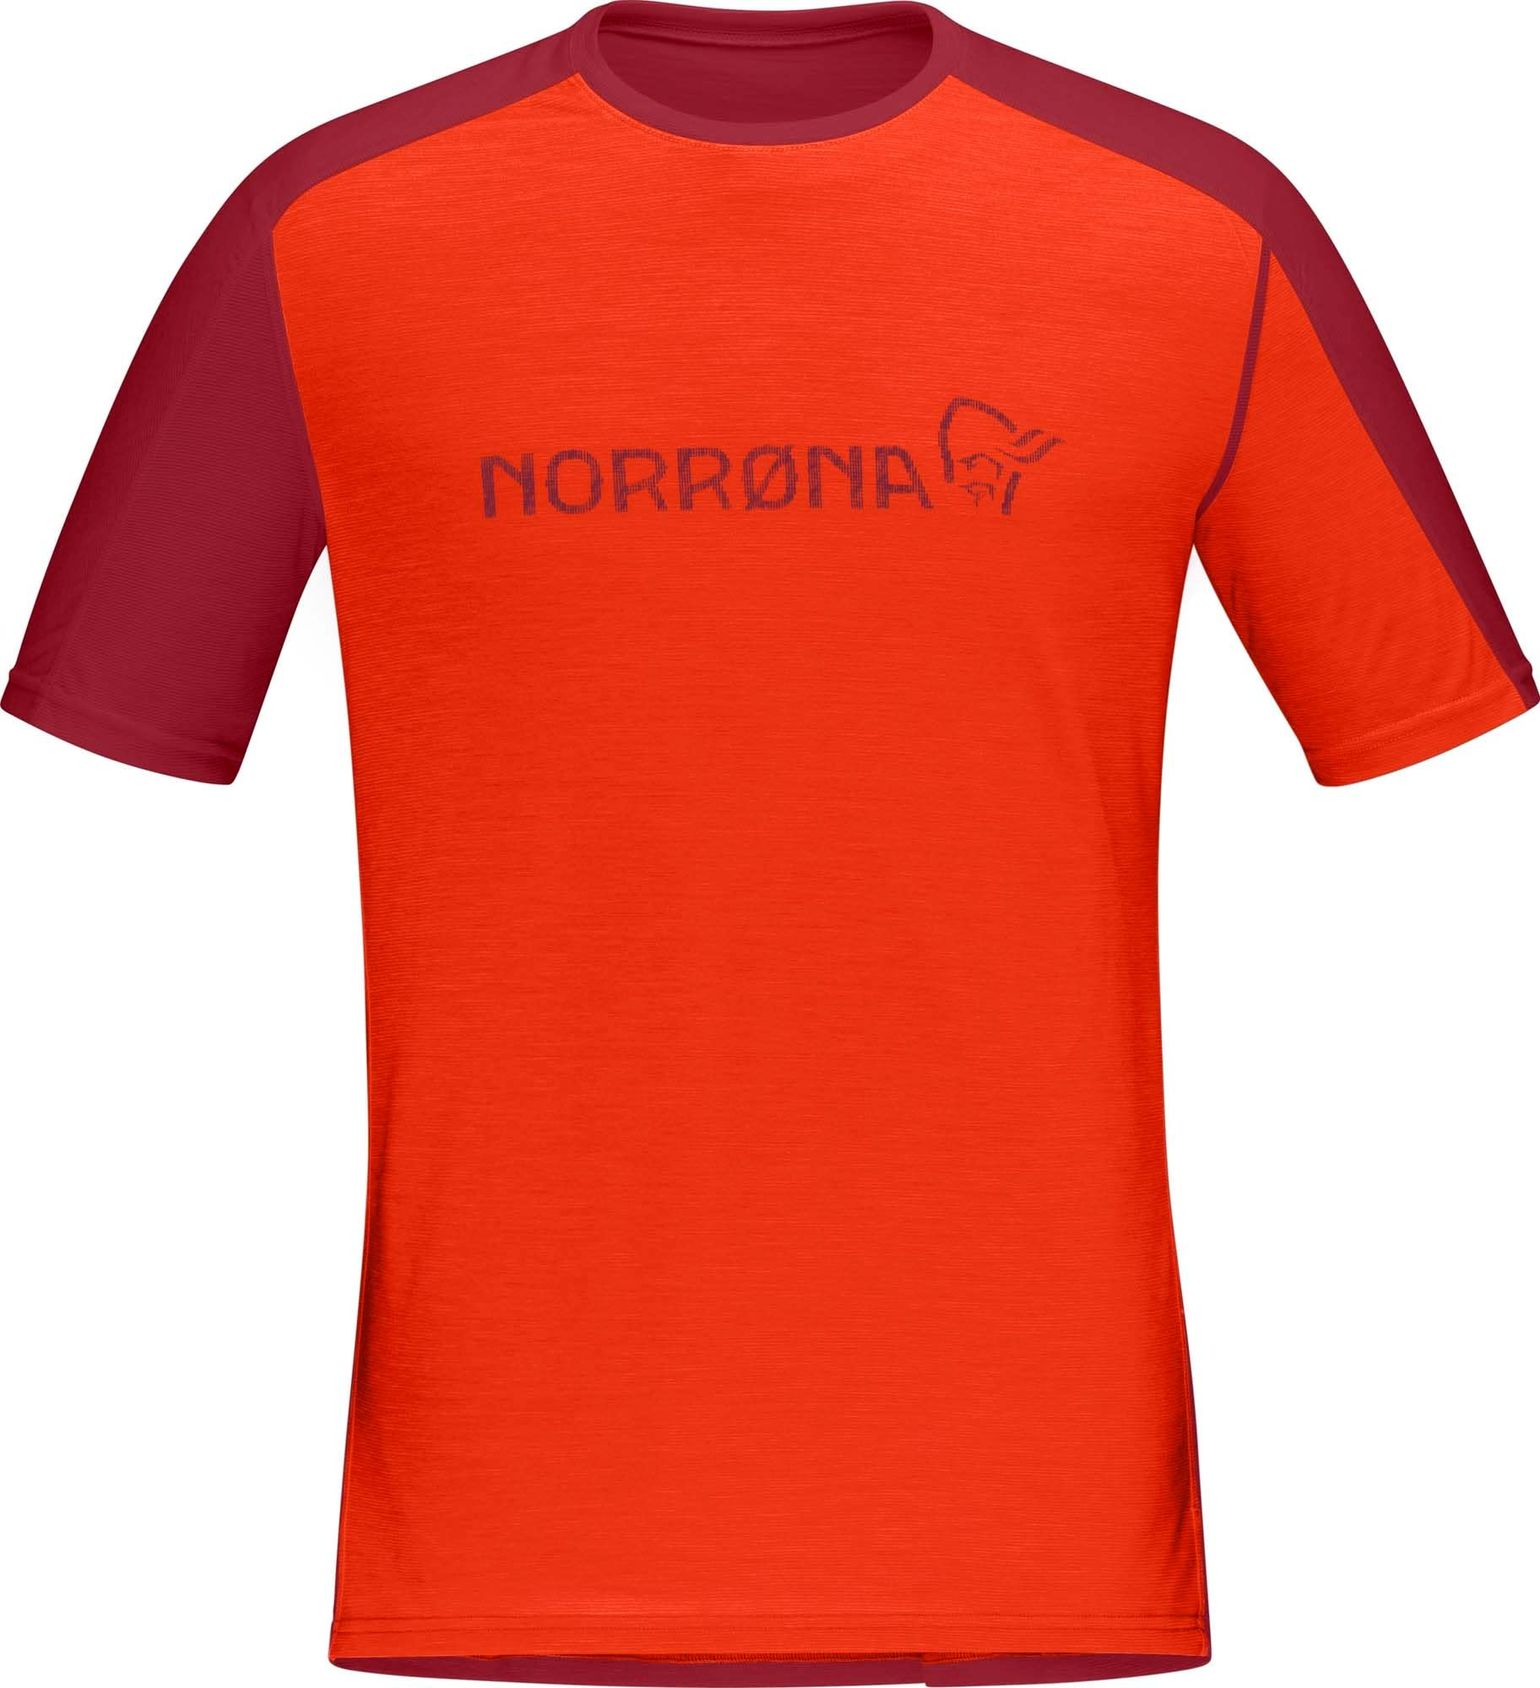 Norrøna Men's Falketind Equaliser Merino T-Shirt Arednalin/Rhubarb